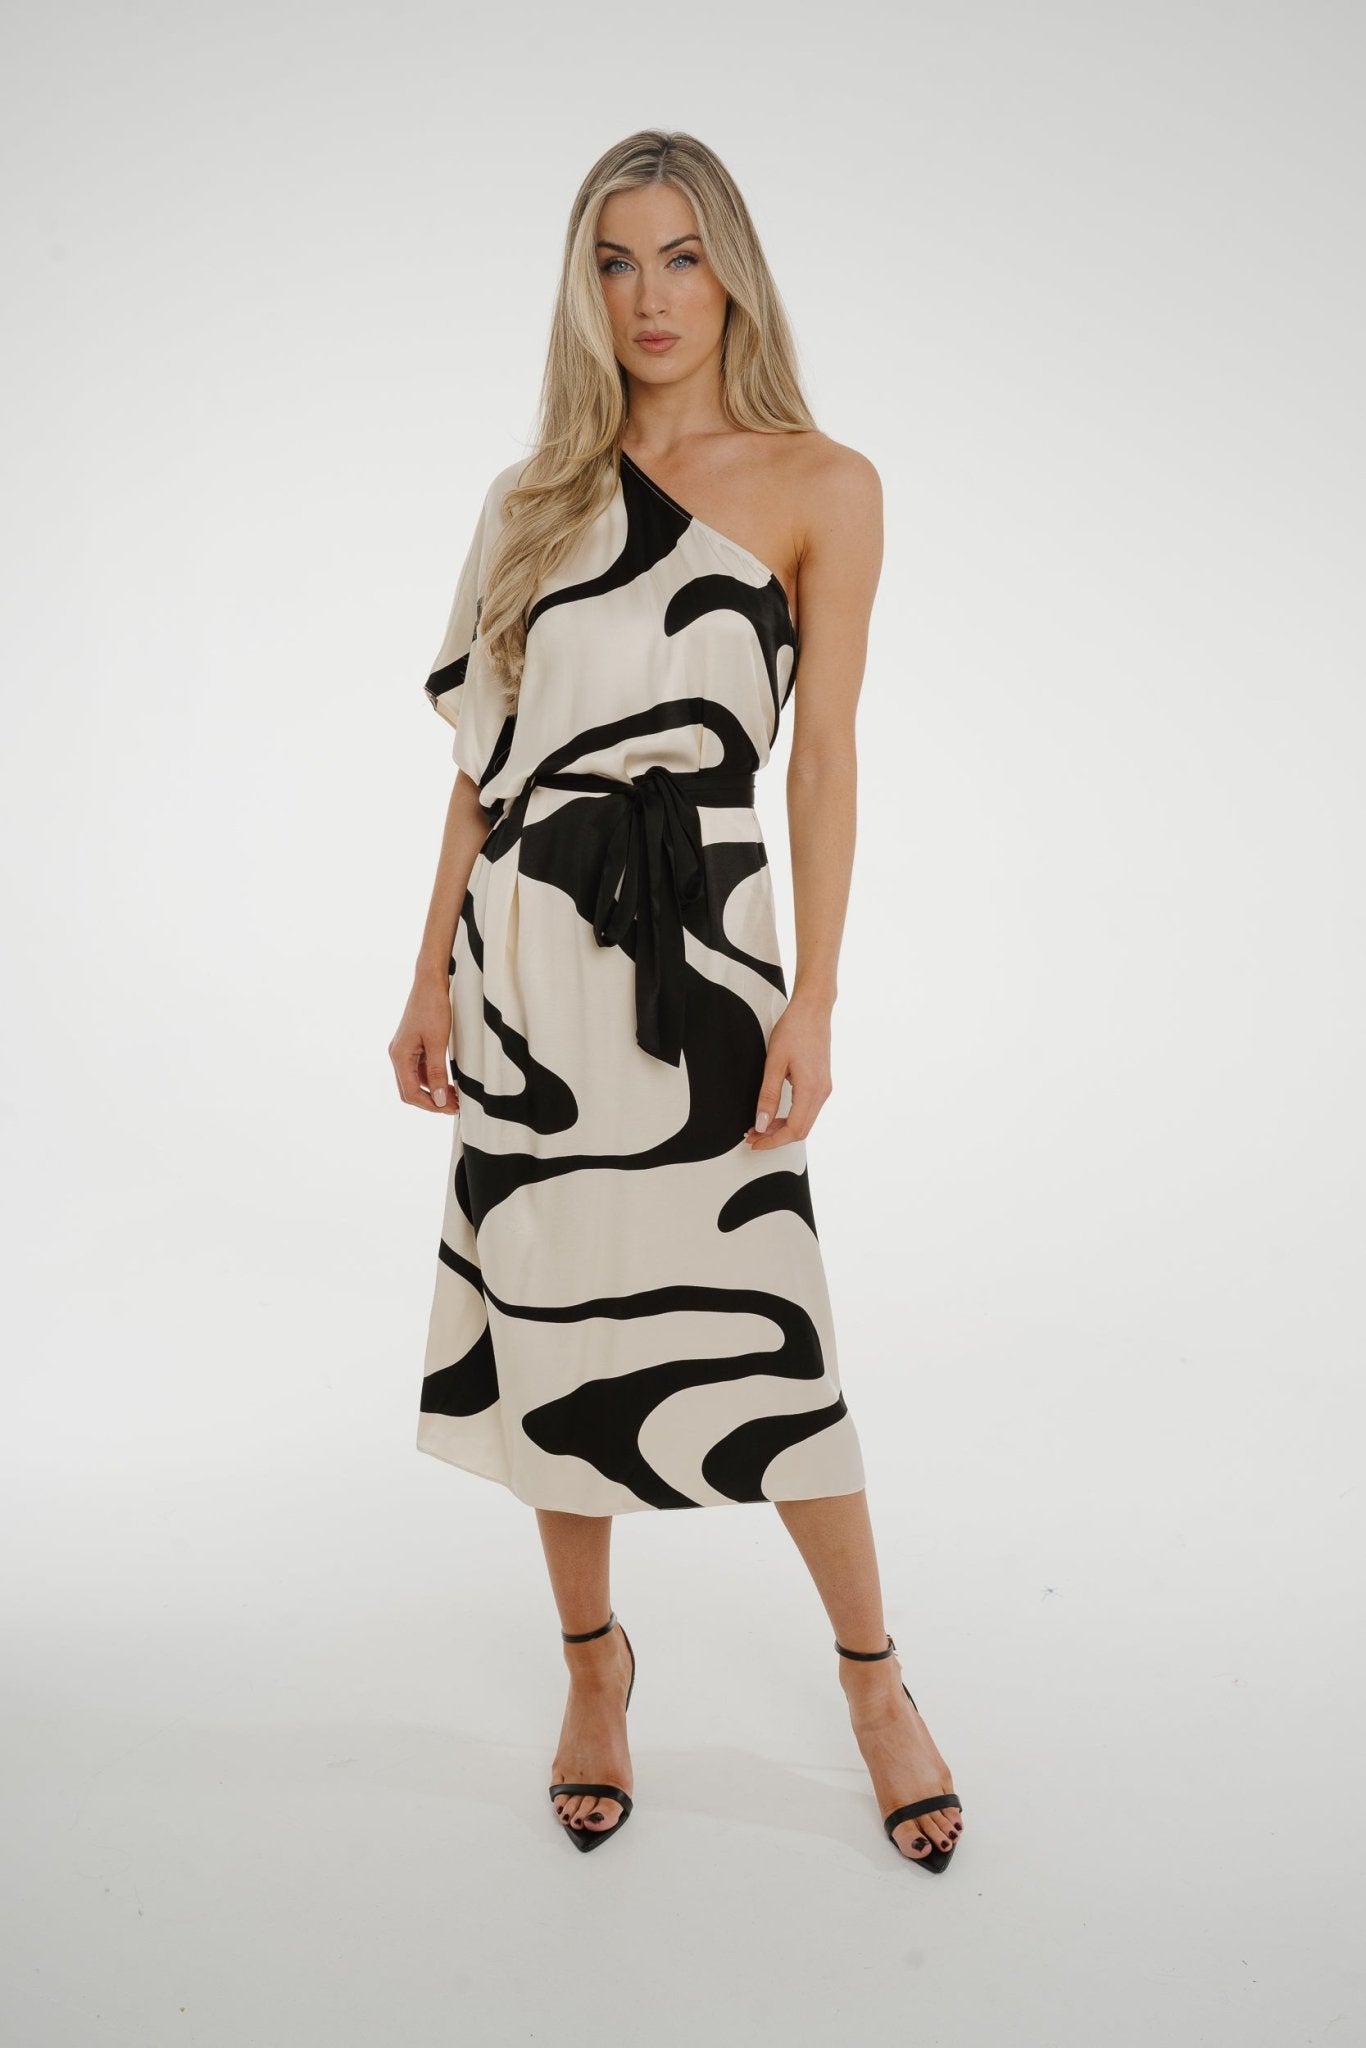 Alana One Shoulder Dress In Monochrome Print - The Walk in Wardrobe